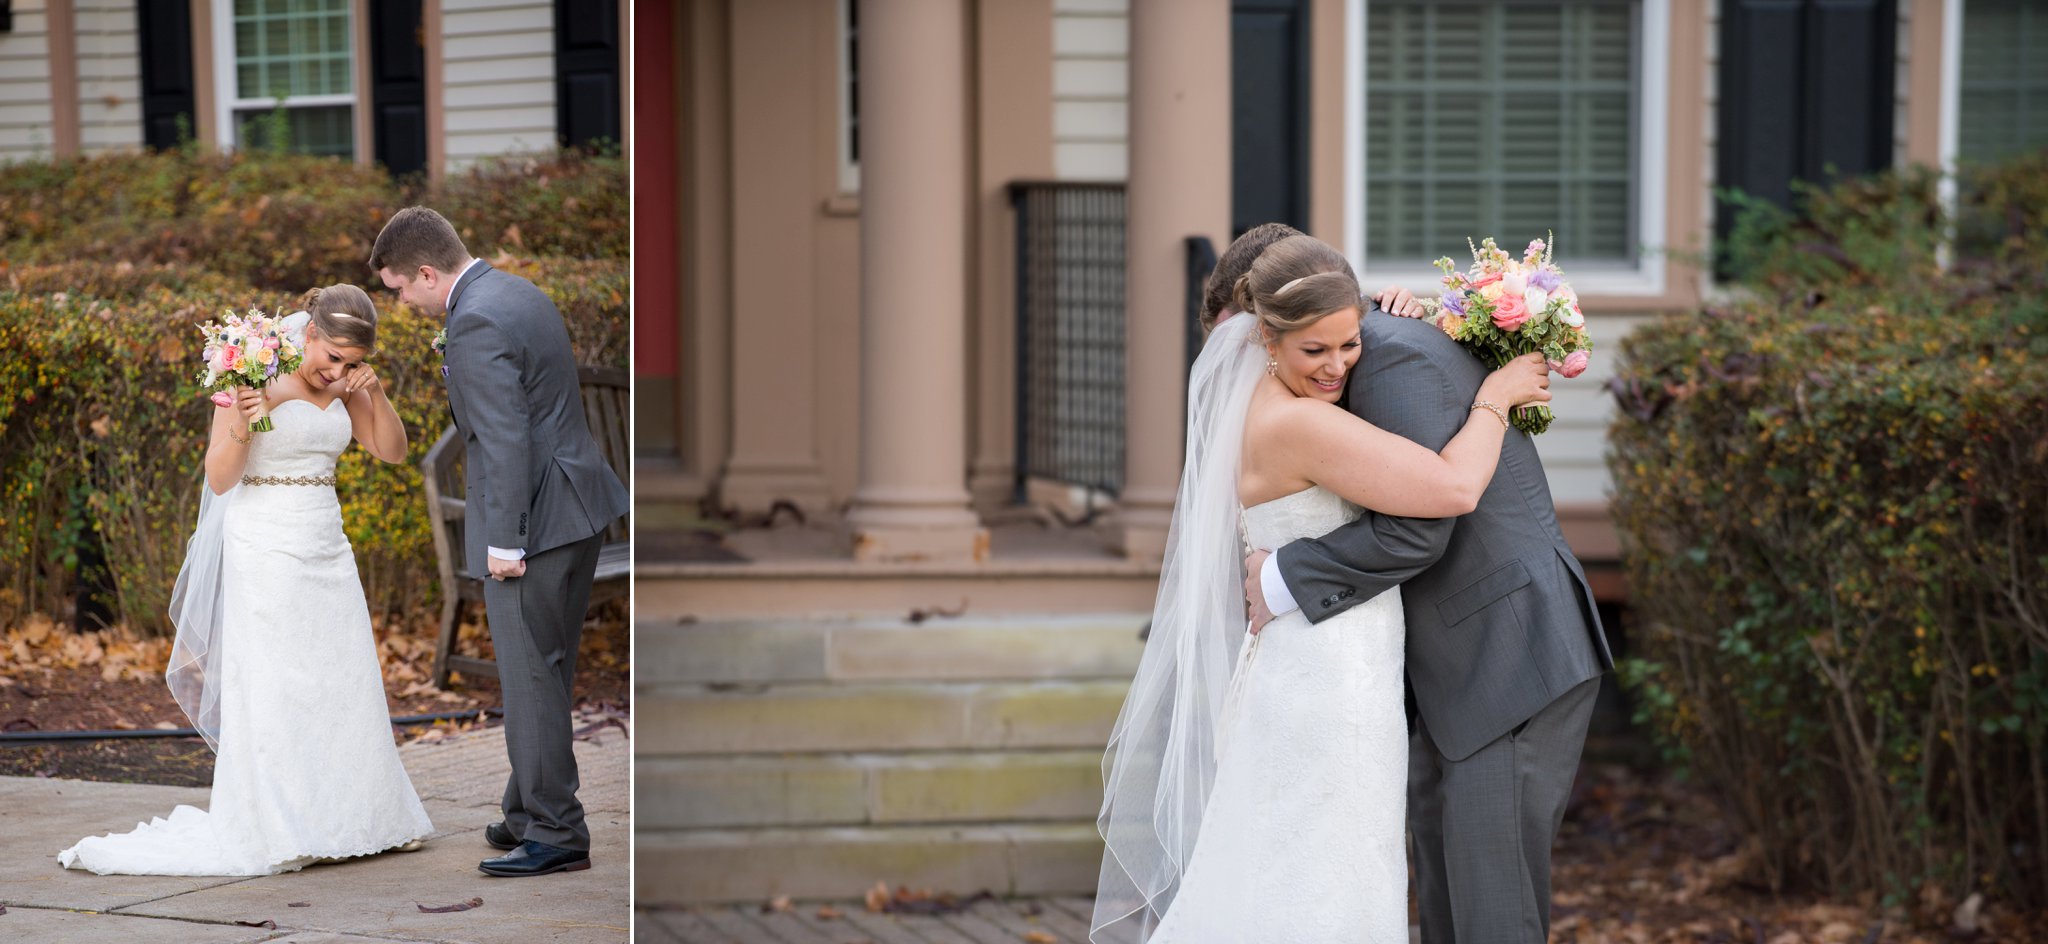 Bride and Groom First Look | Dearborn Inn Wedding | Detroit Michigan | Sarah and Rachel Wedding Photographers